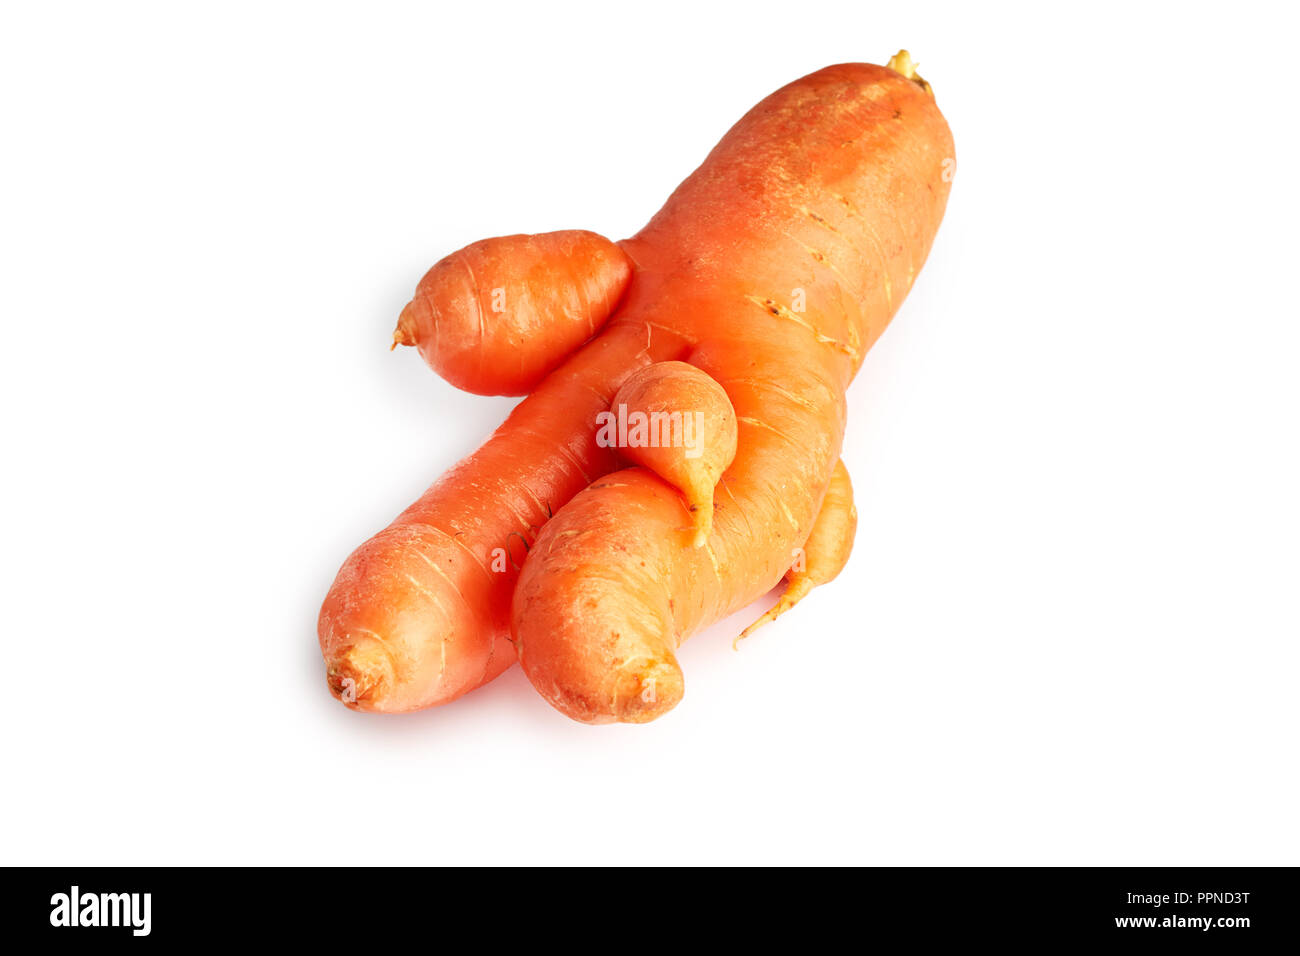 Imperfect fresh organic carrot isolated on white background Stock Photo